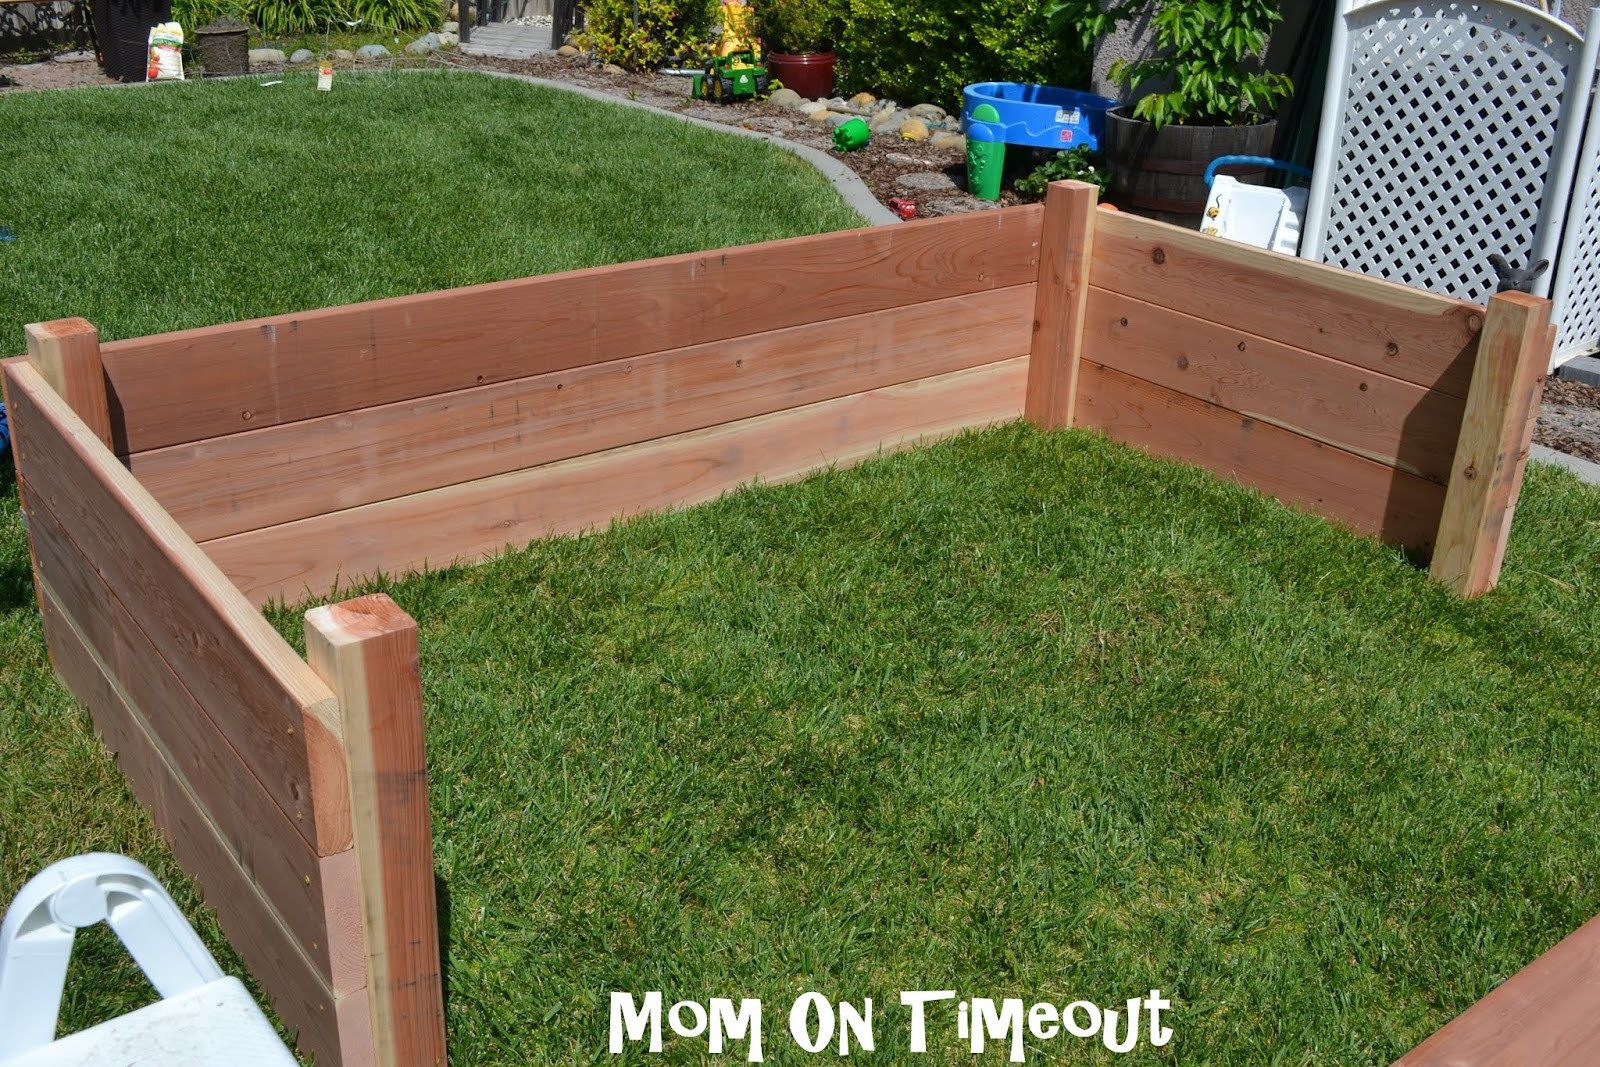 Best ideas about DIY Garden Box
. Save or Pin DIY Garden Planter Box Tutorial Now.